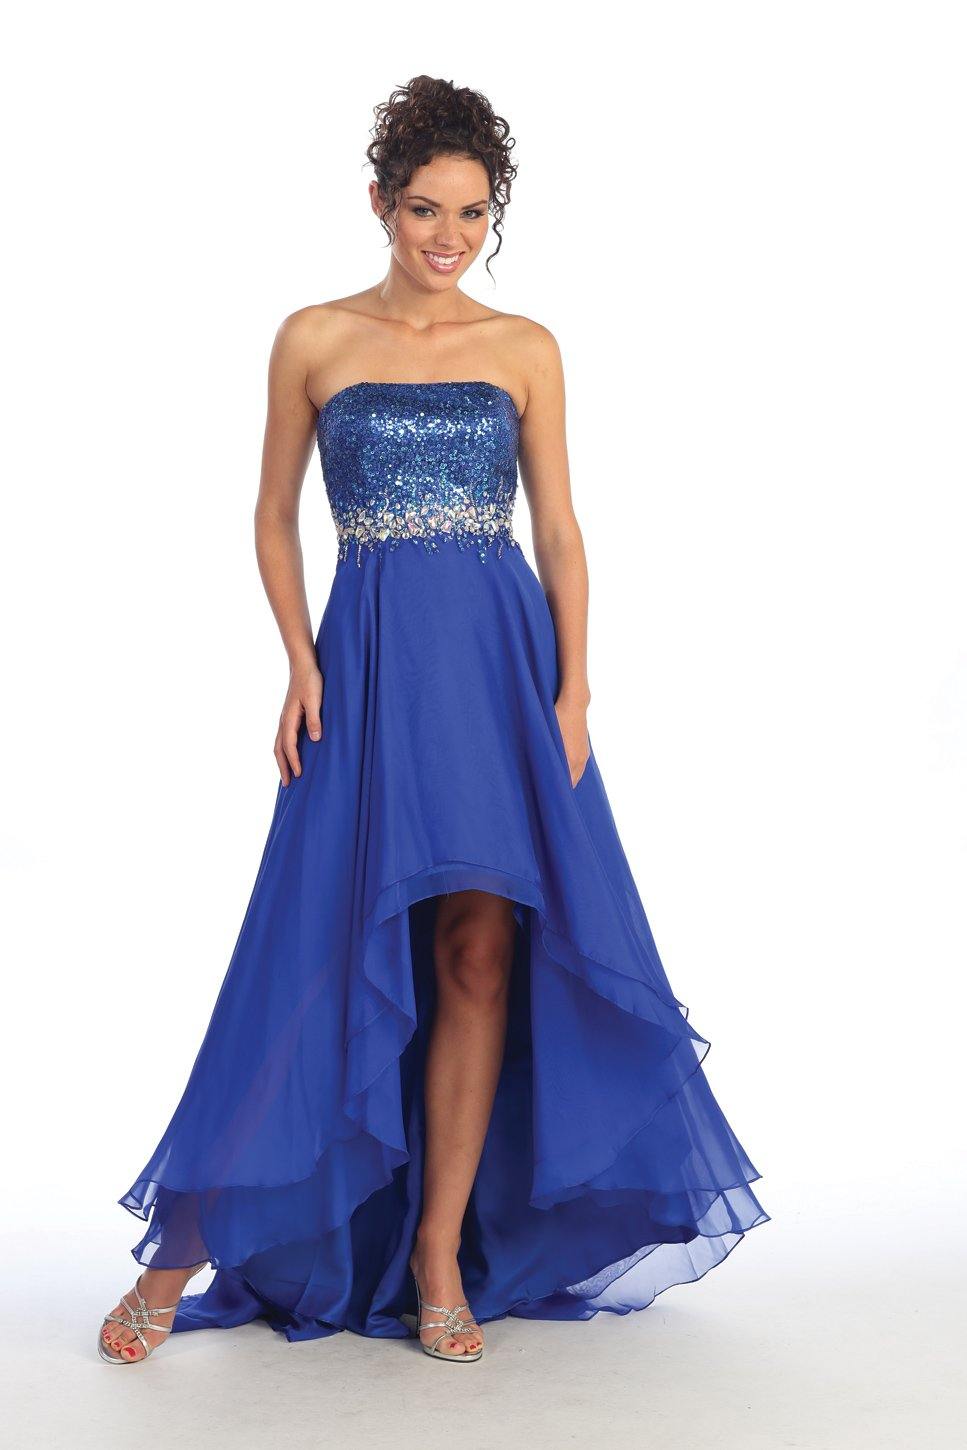 Strapless Chiffon High-Low Prom Dress - The Dress Outlet Elizabeth K